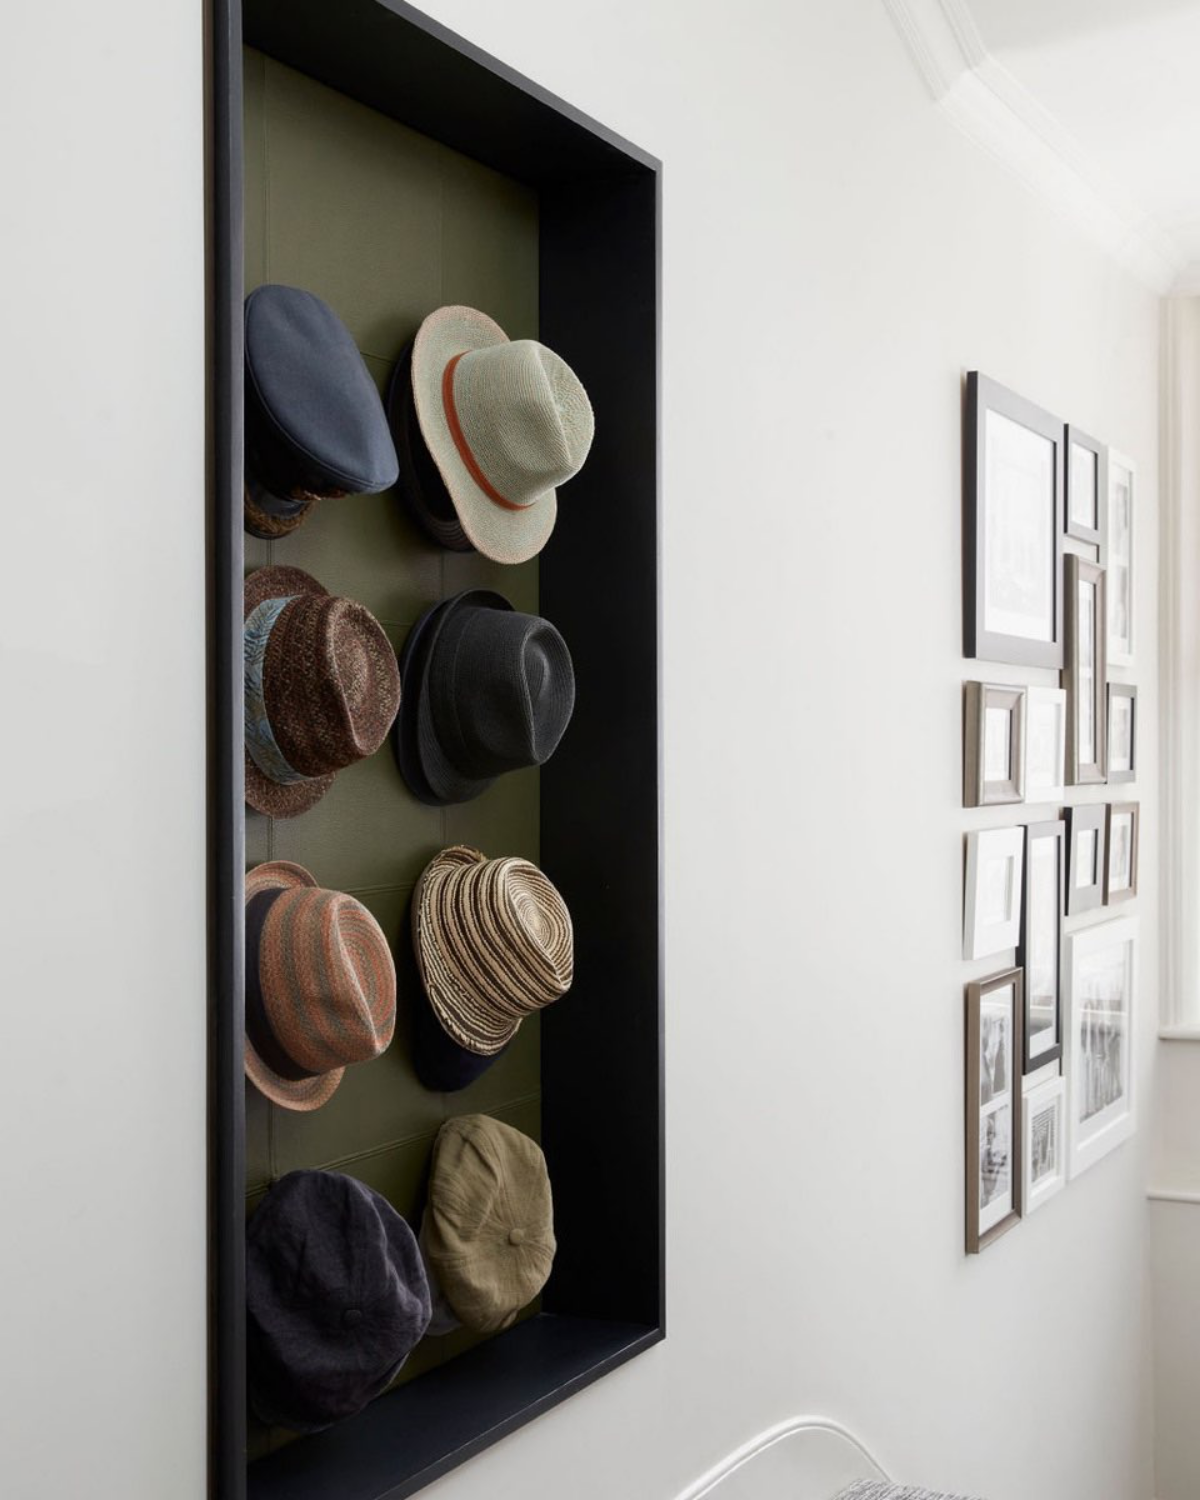 hats on pins on display